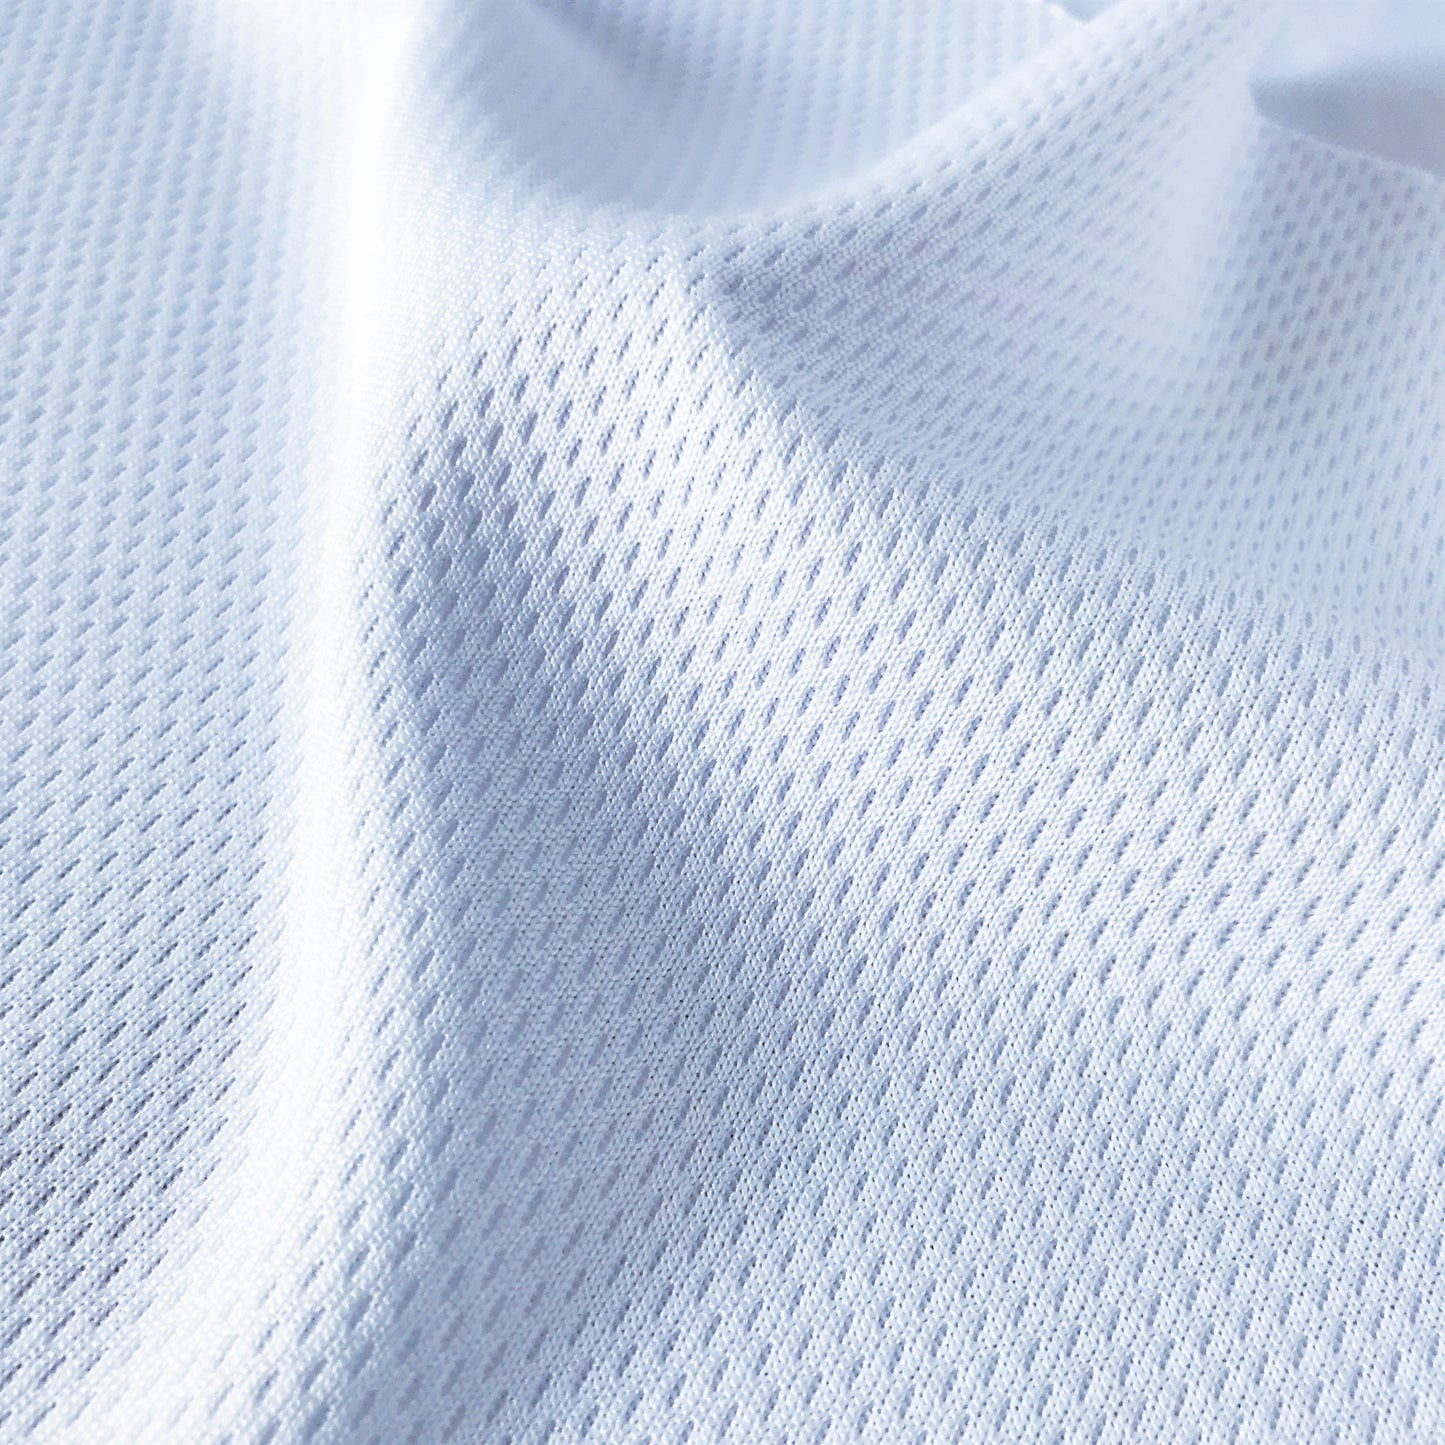 Premium MTB Jersey: Recce Classic Turquoise Short Sleeve - Shop Now!